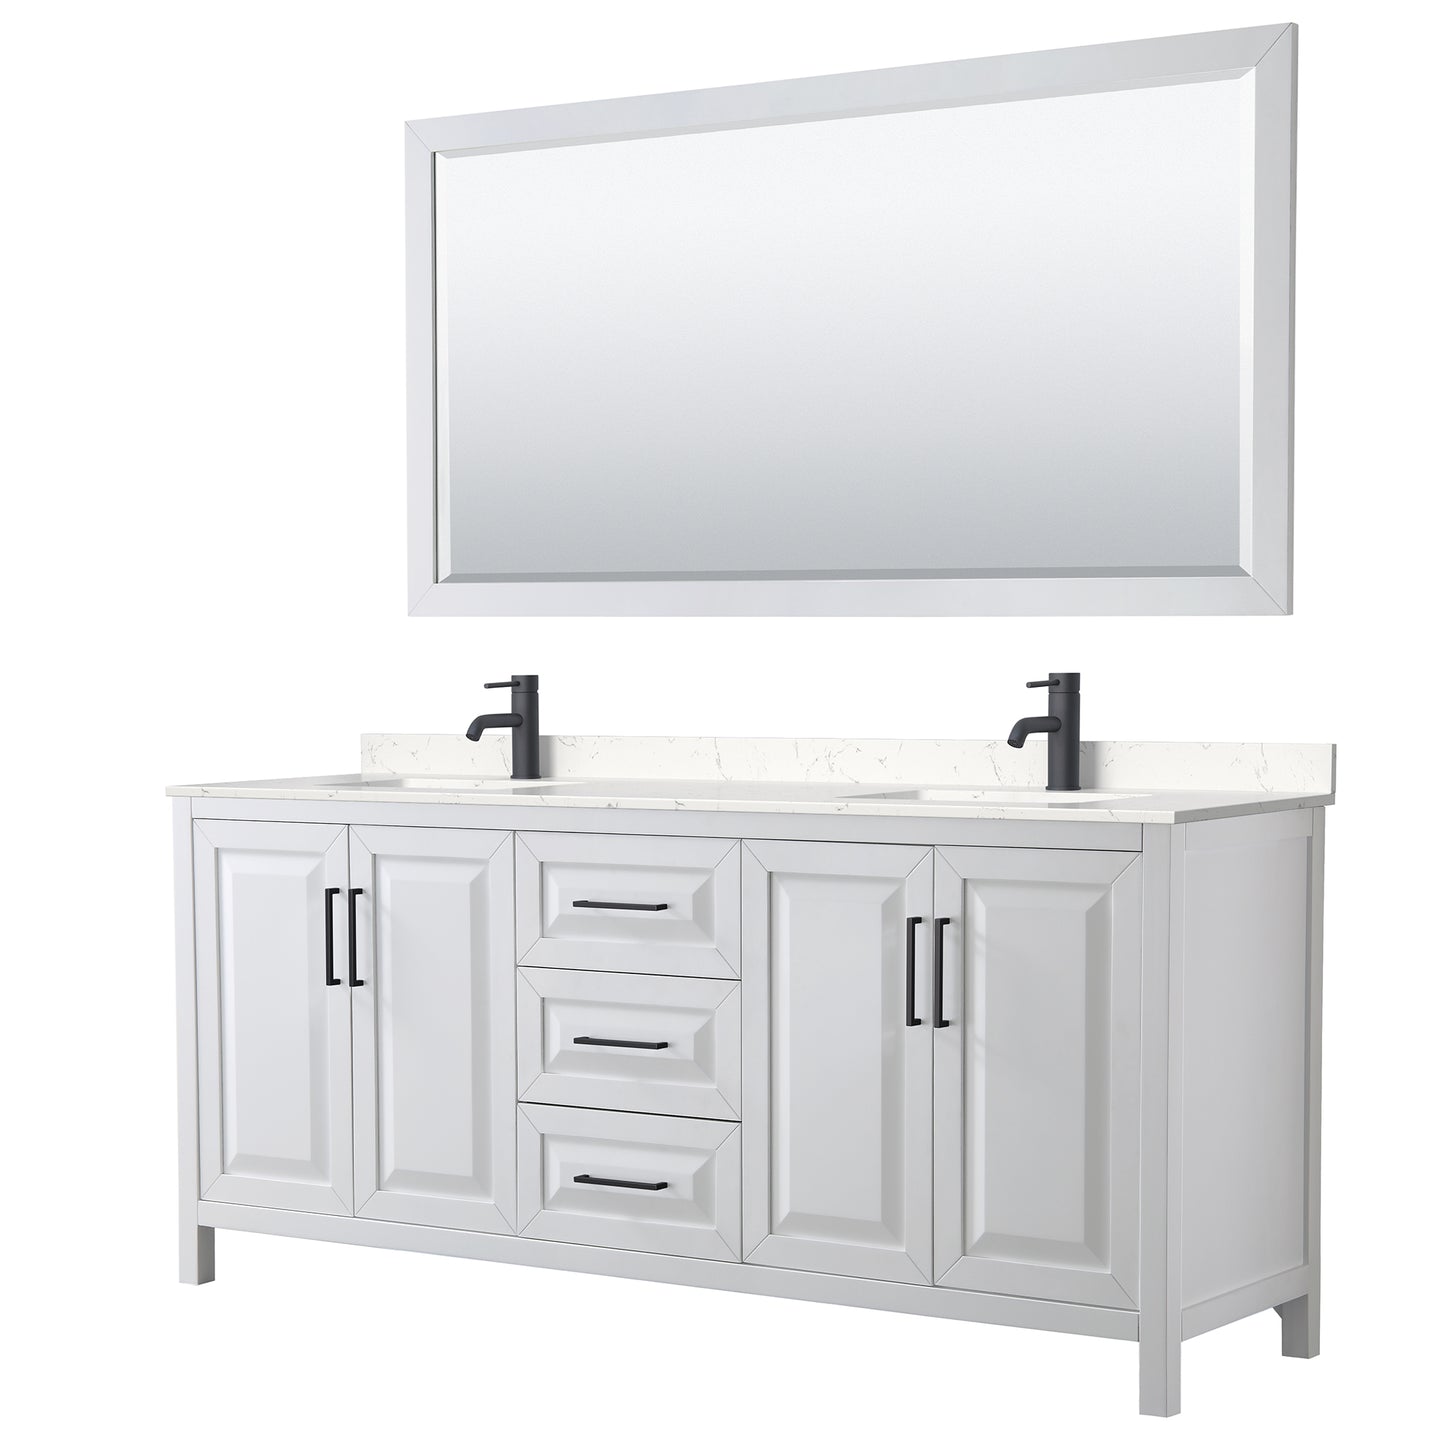 Wyndham Daria 80 Inch Double Bathroom Vanity Light-Vein Carrara Cultured Marble Countertop, Undermount Square Sinks in Matte Black Trim with 70 Inch Mirror - Luxe Bathroom Vanities